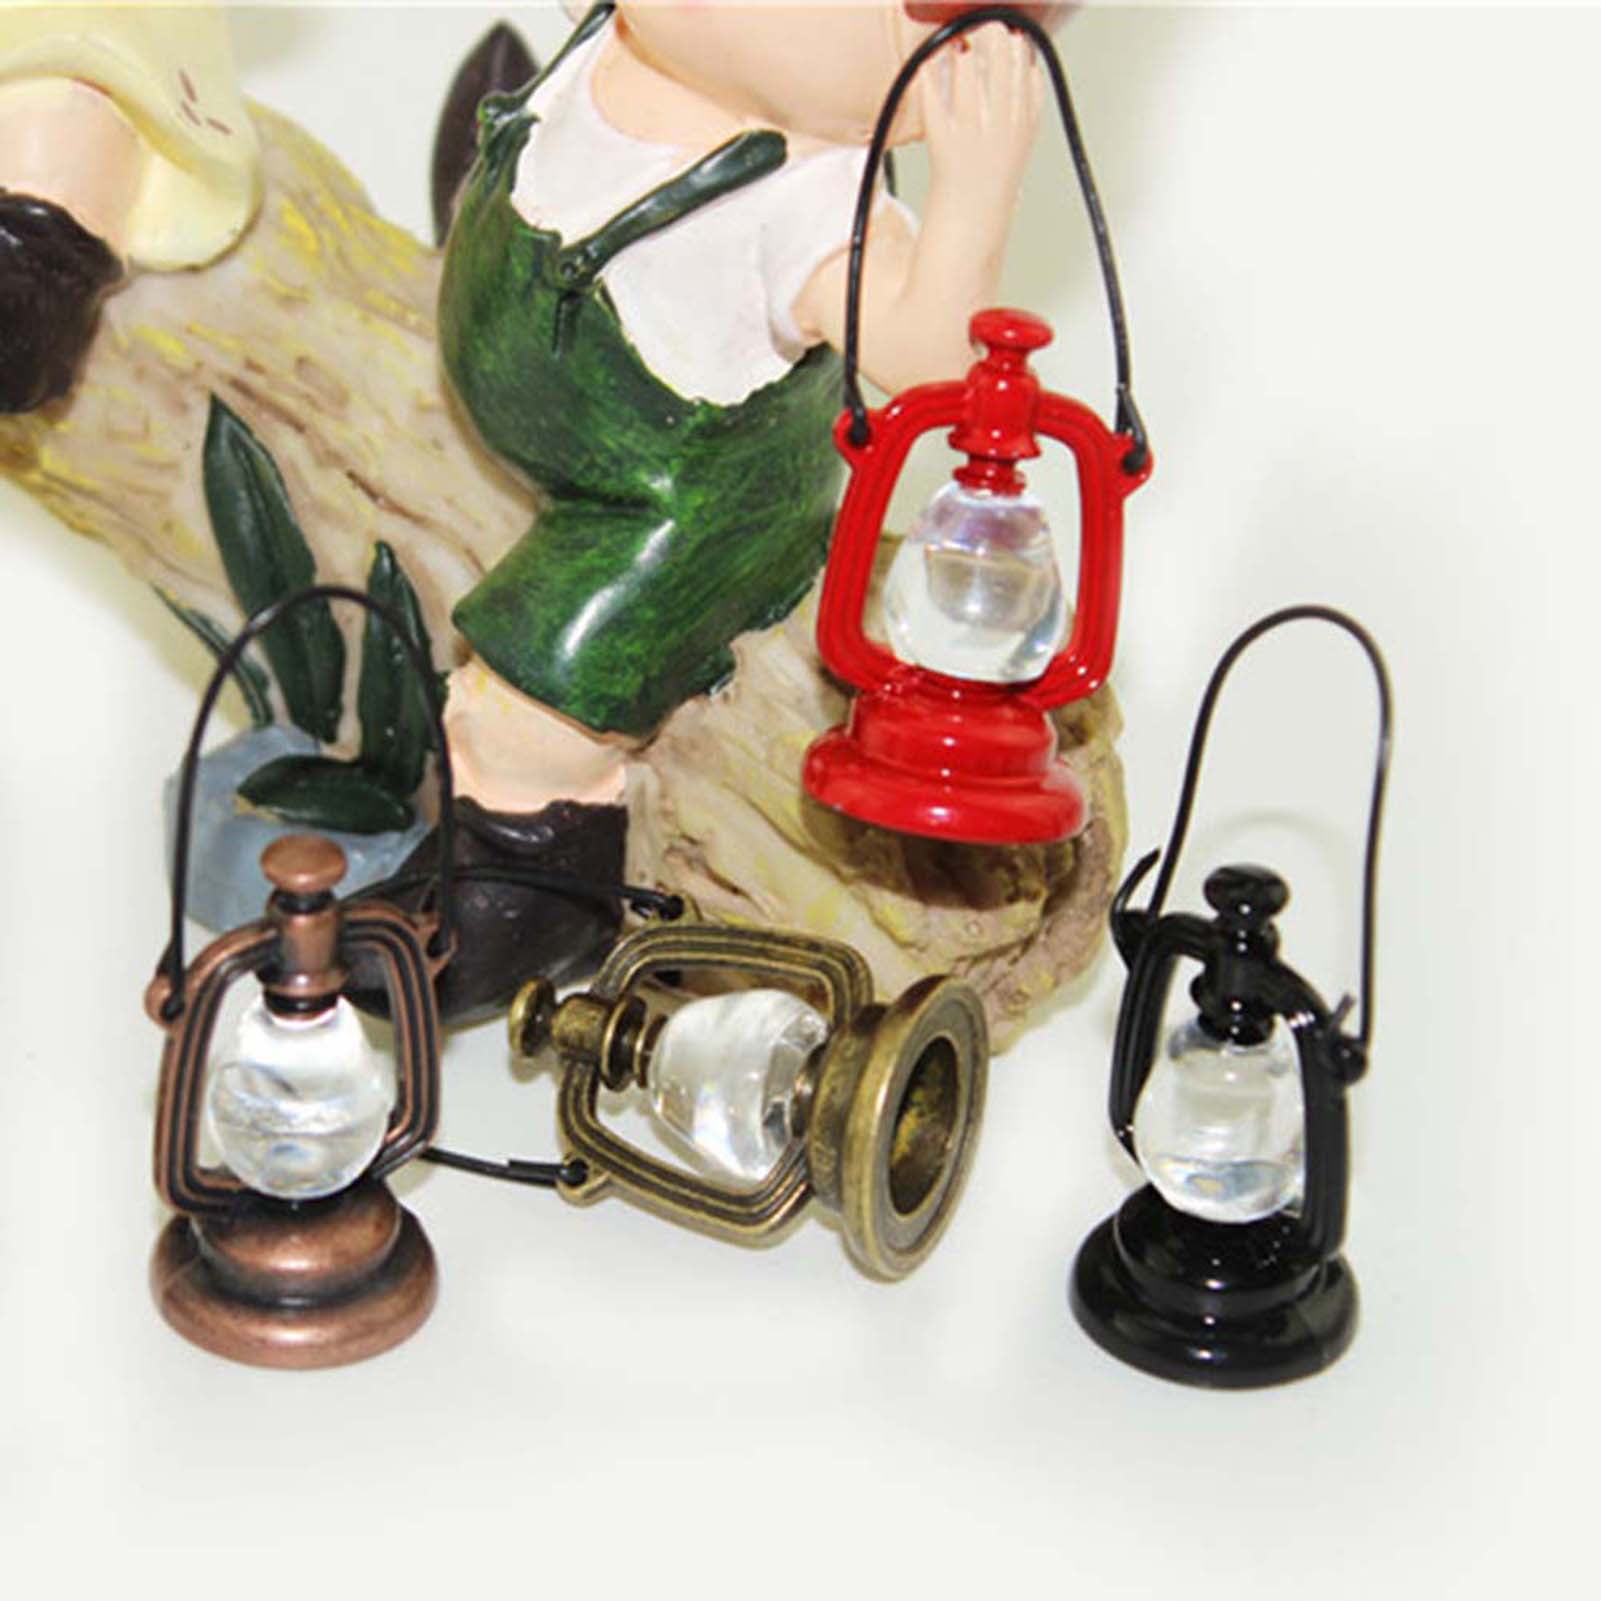 1/12 Scale Miniature Dollhouse Accessories Decoration Mini Oil Lamp Kids Toy Hot